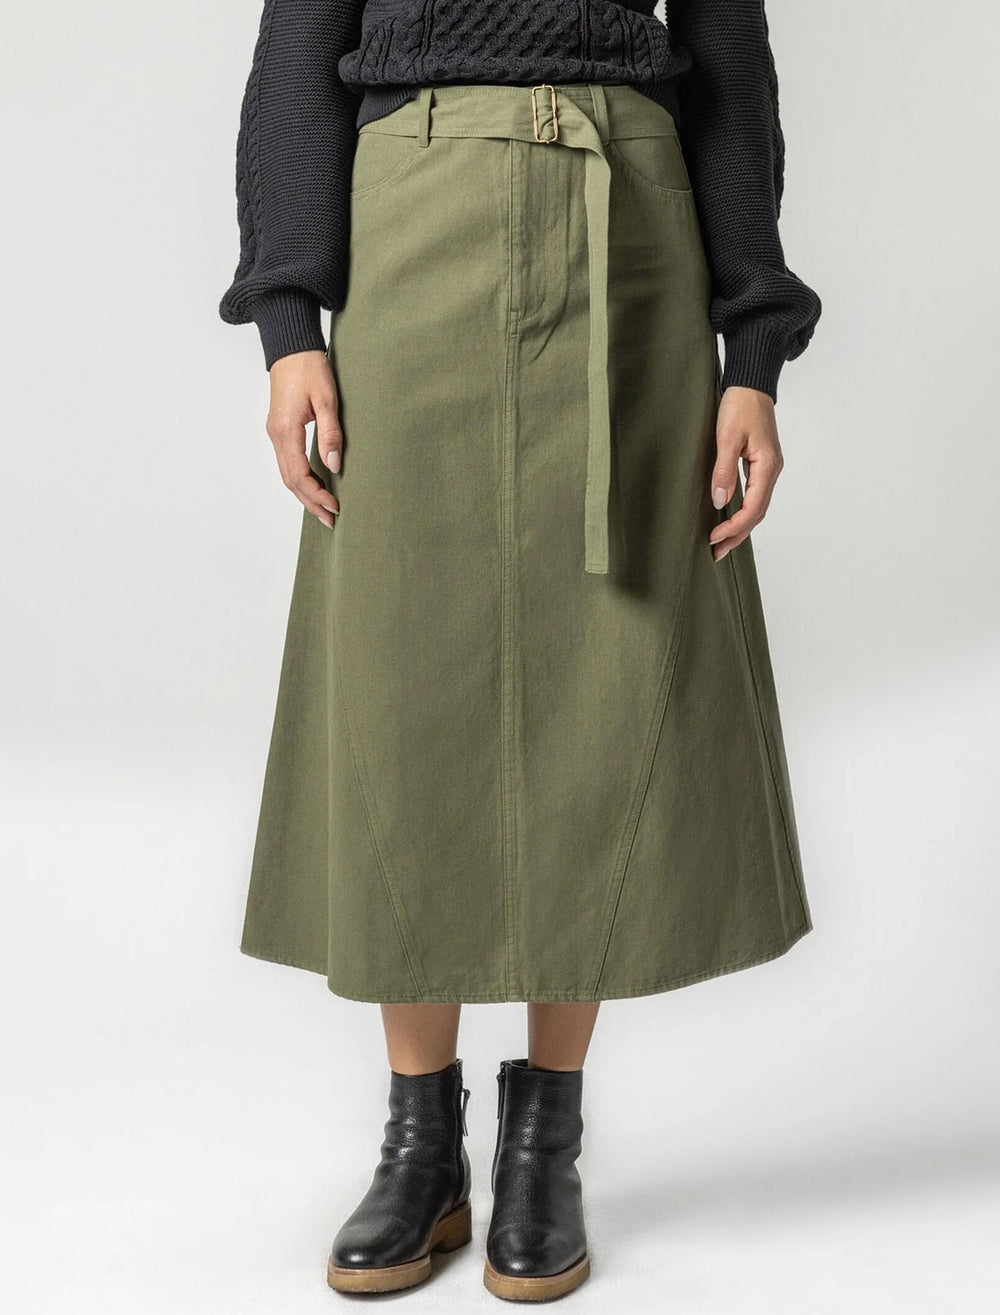 Model wearing Lilla P.'s jean skirt in army.